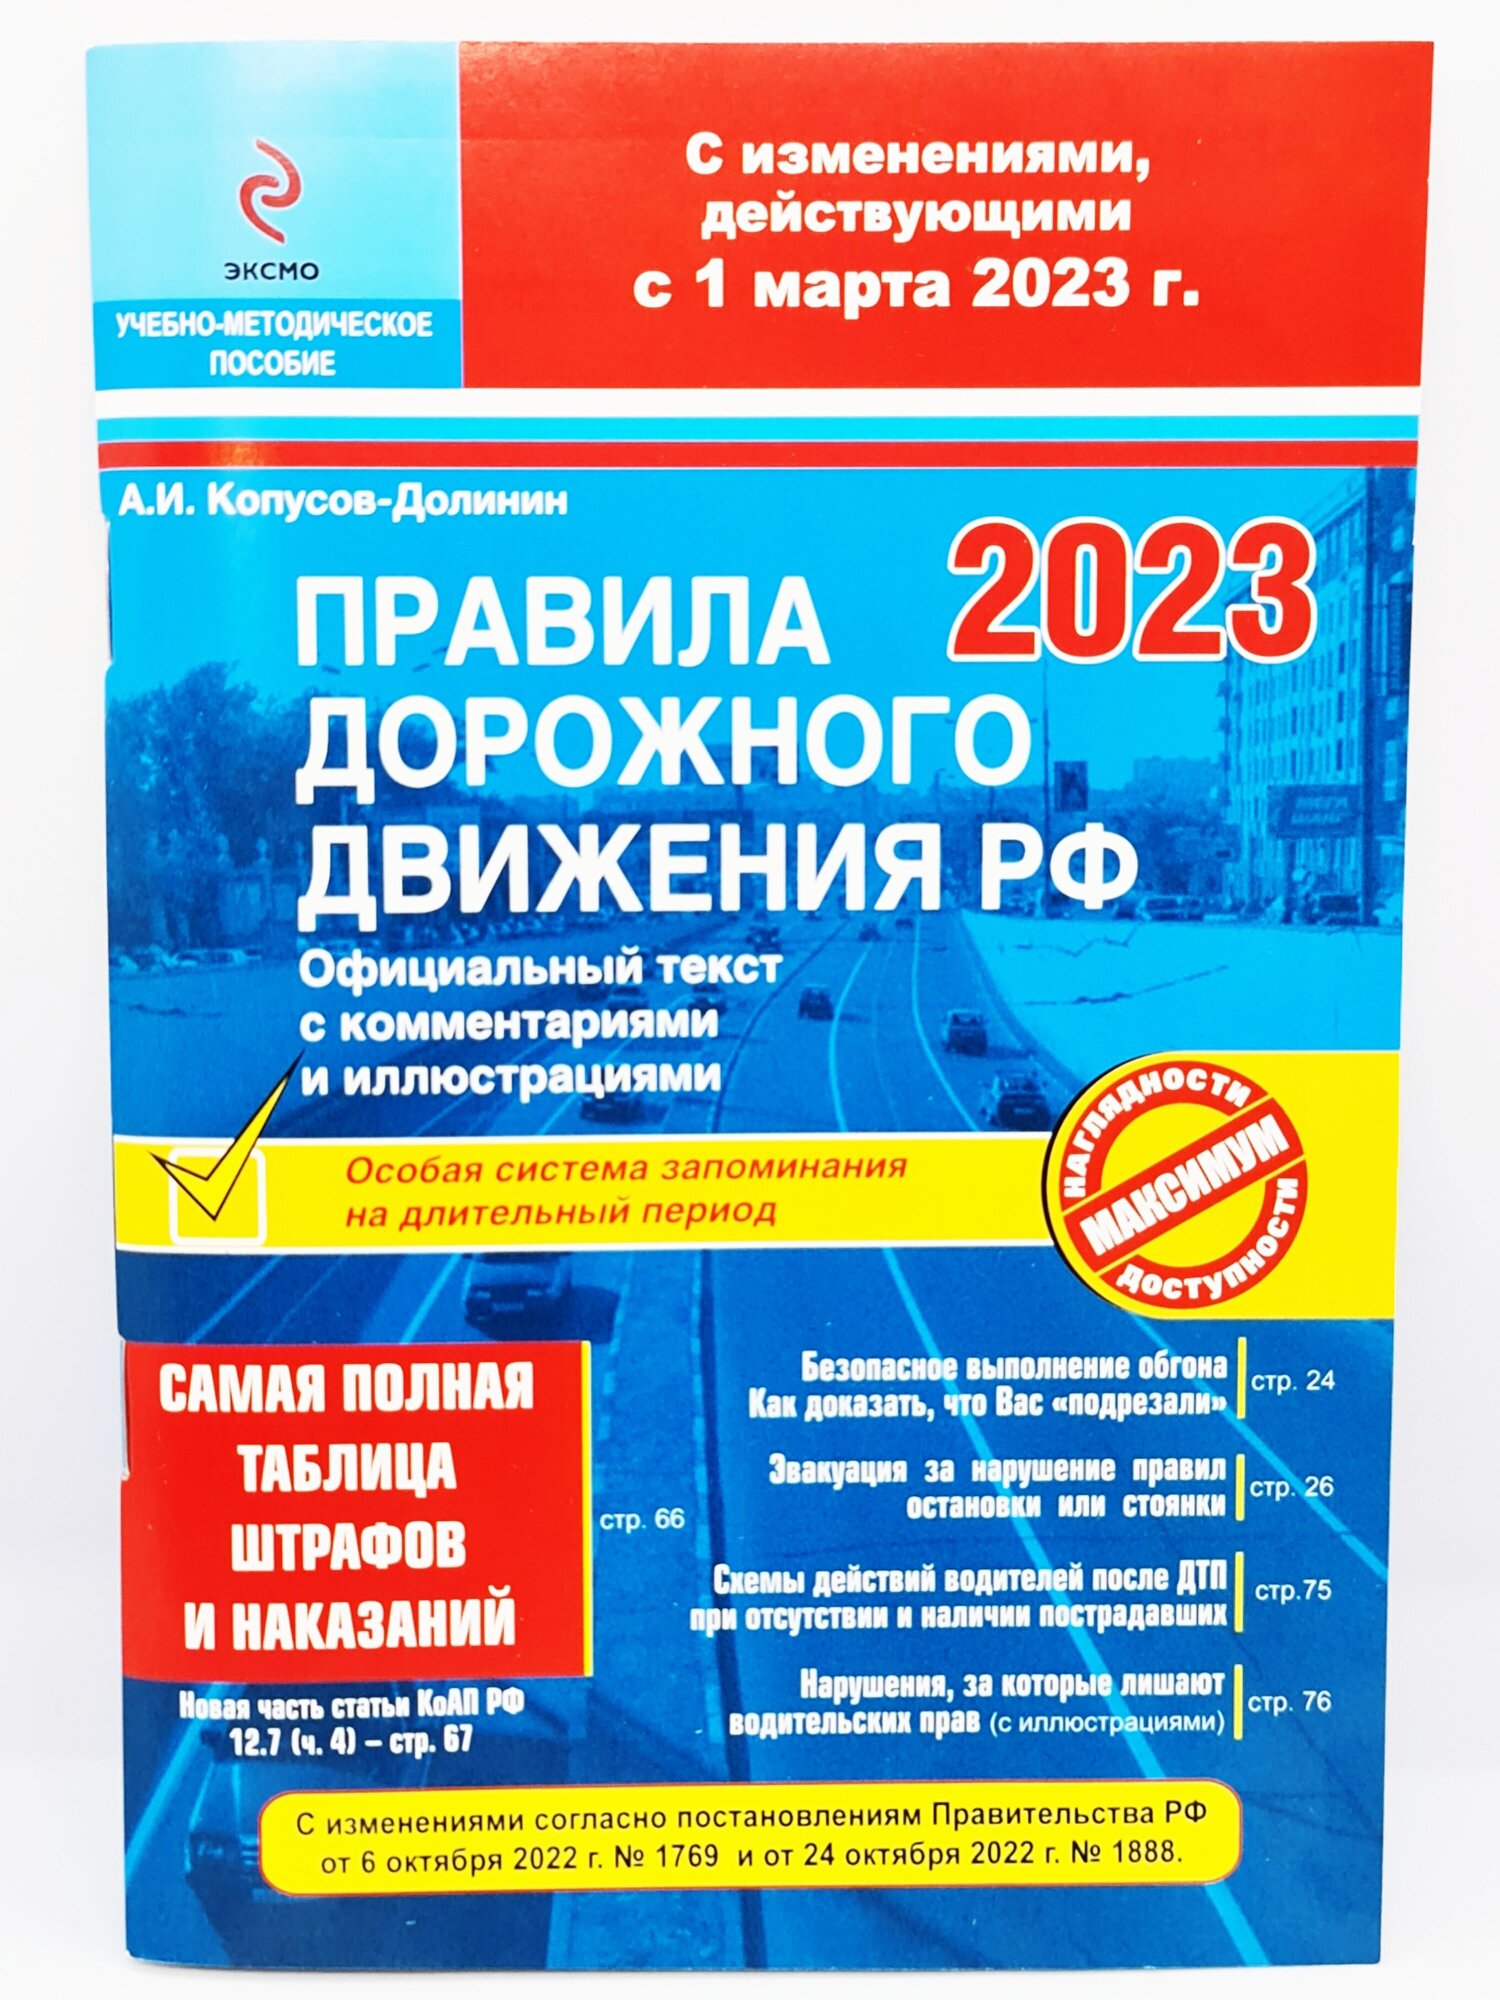 ПДД РФ на 1 марта 2023 года с комментариями и иллюстрациями (с последними изменениями и дополнениями) - фото №5